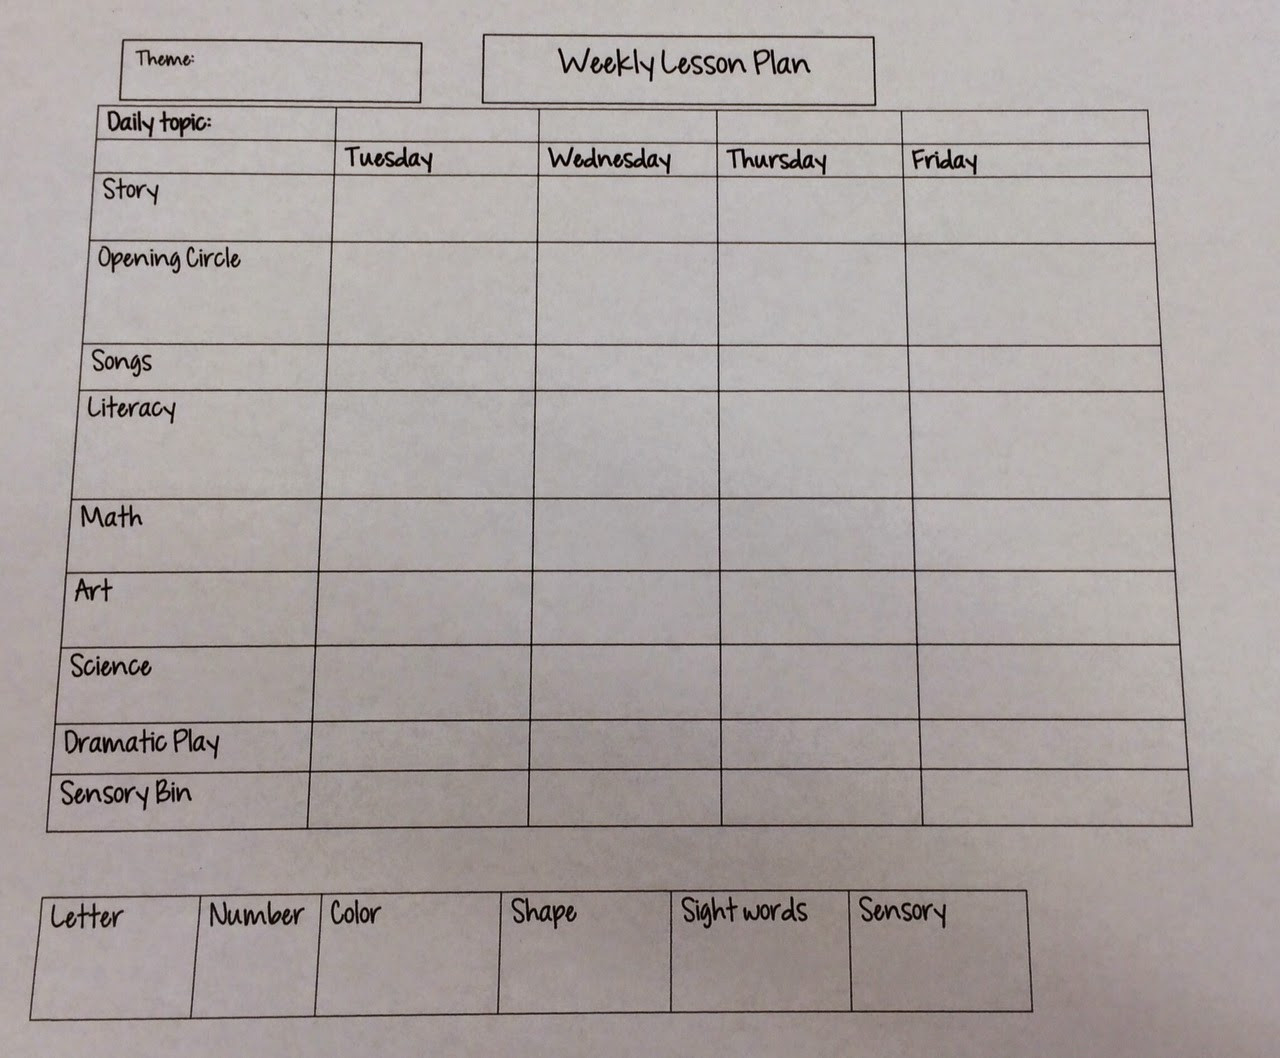 Preschool Weekly Lesson Plan Miss Nicole S Preschool Weekly Lesson Plan Template